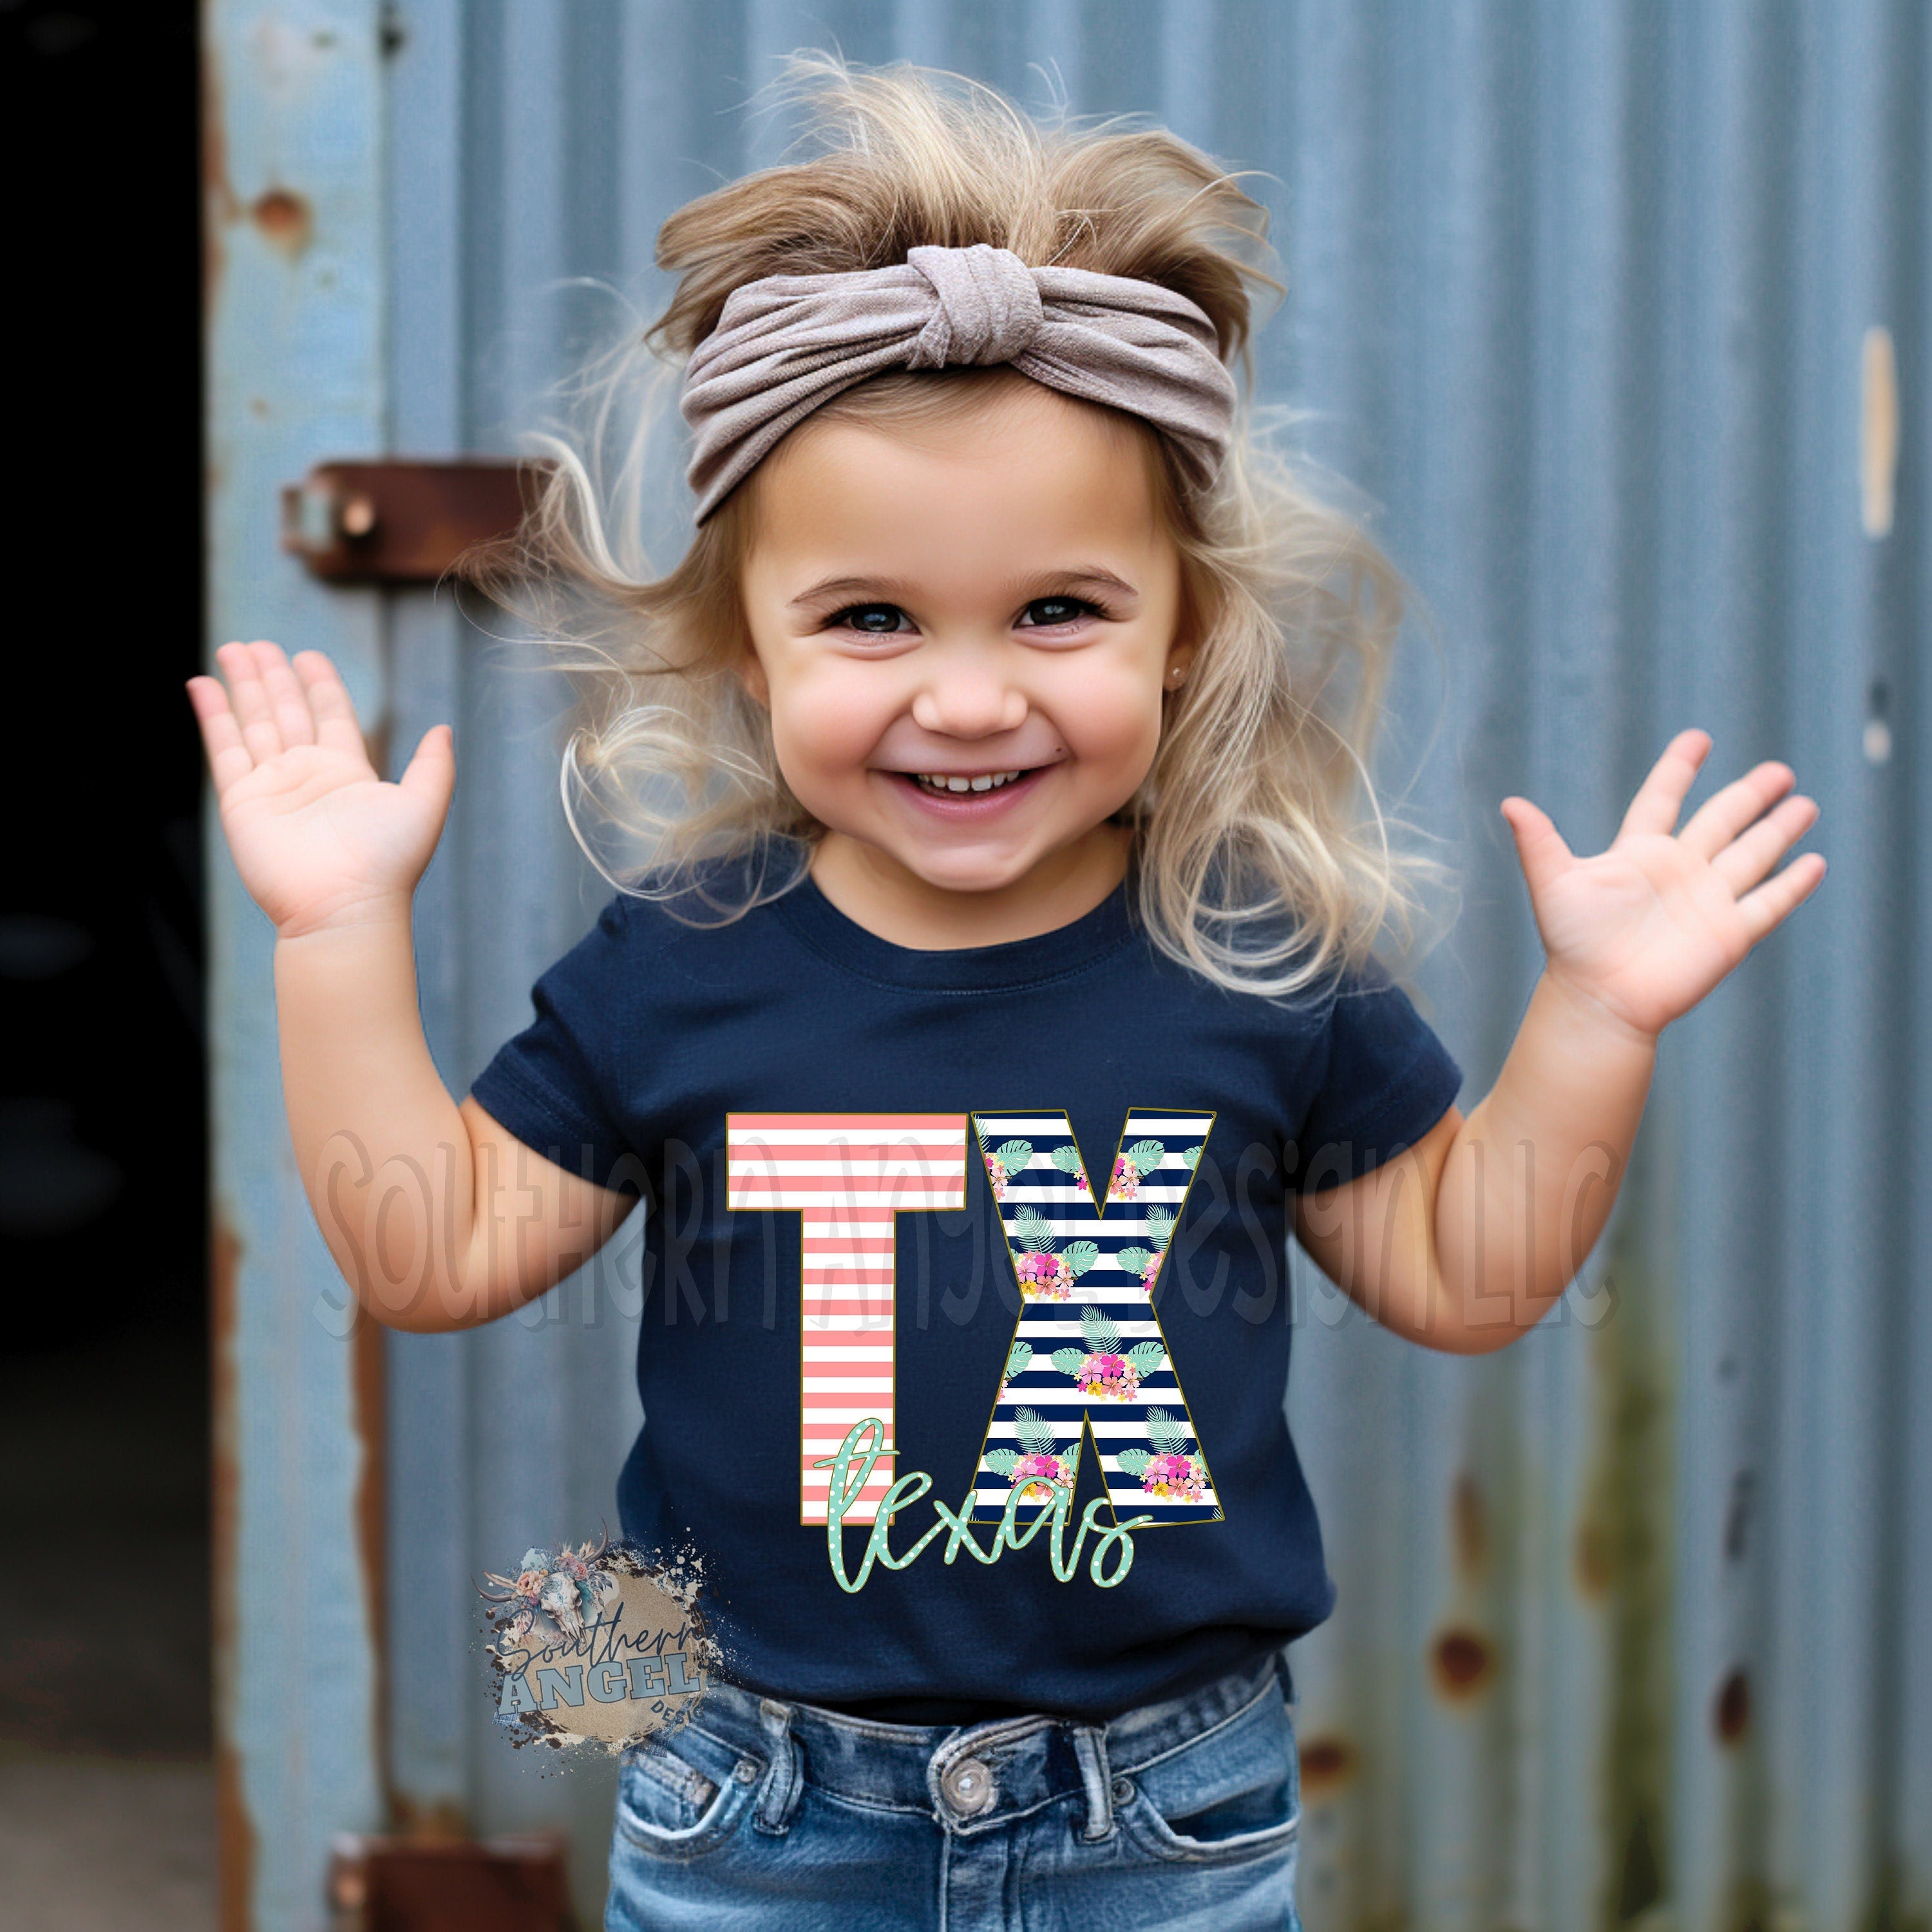 Texas Girl shirt, Faith the size of Texas shirt, Lone Star state shirt, country girl shirt, Girls rodeo shirt, kids Texas forever shirt